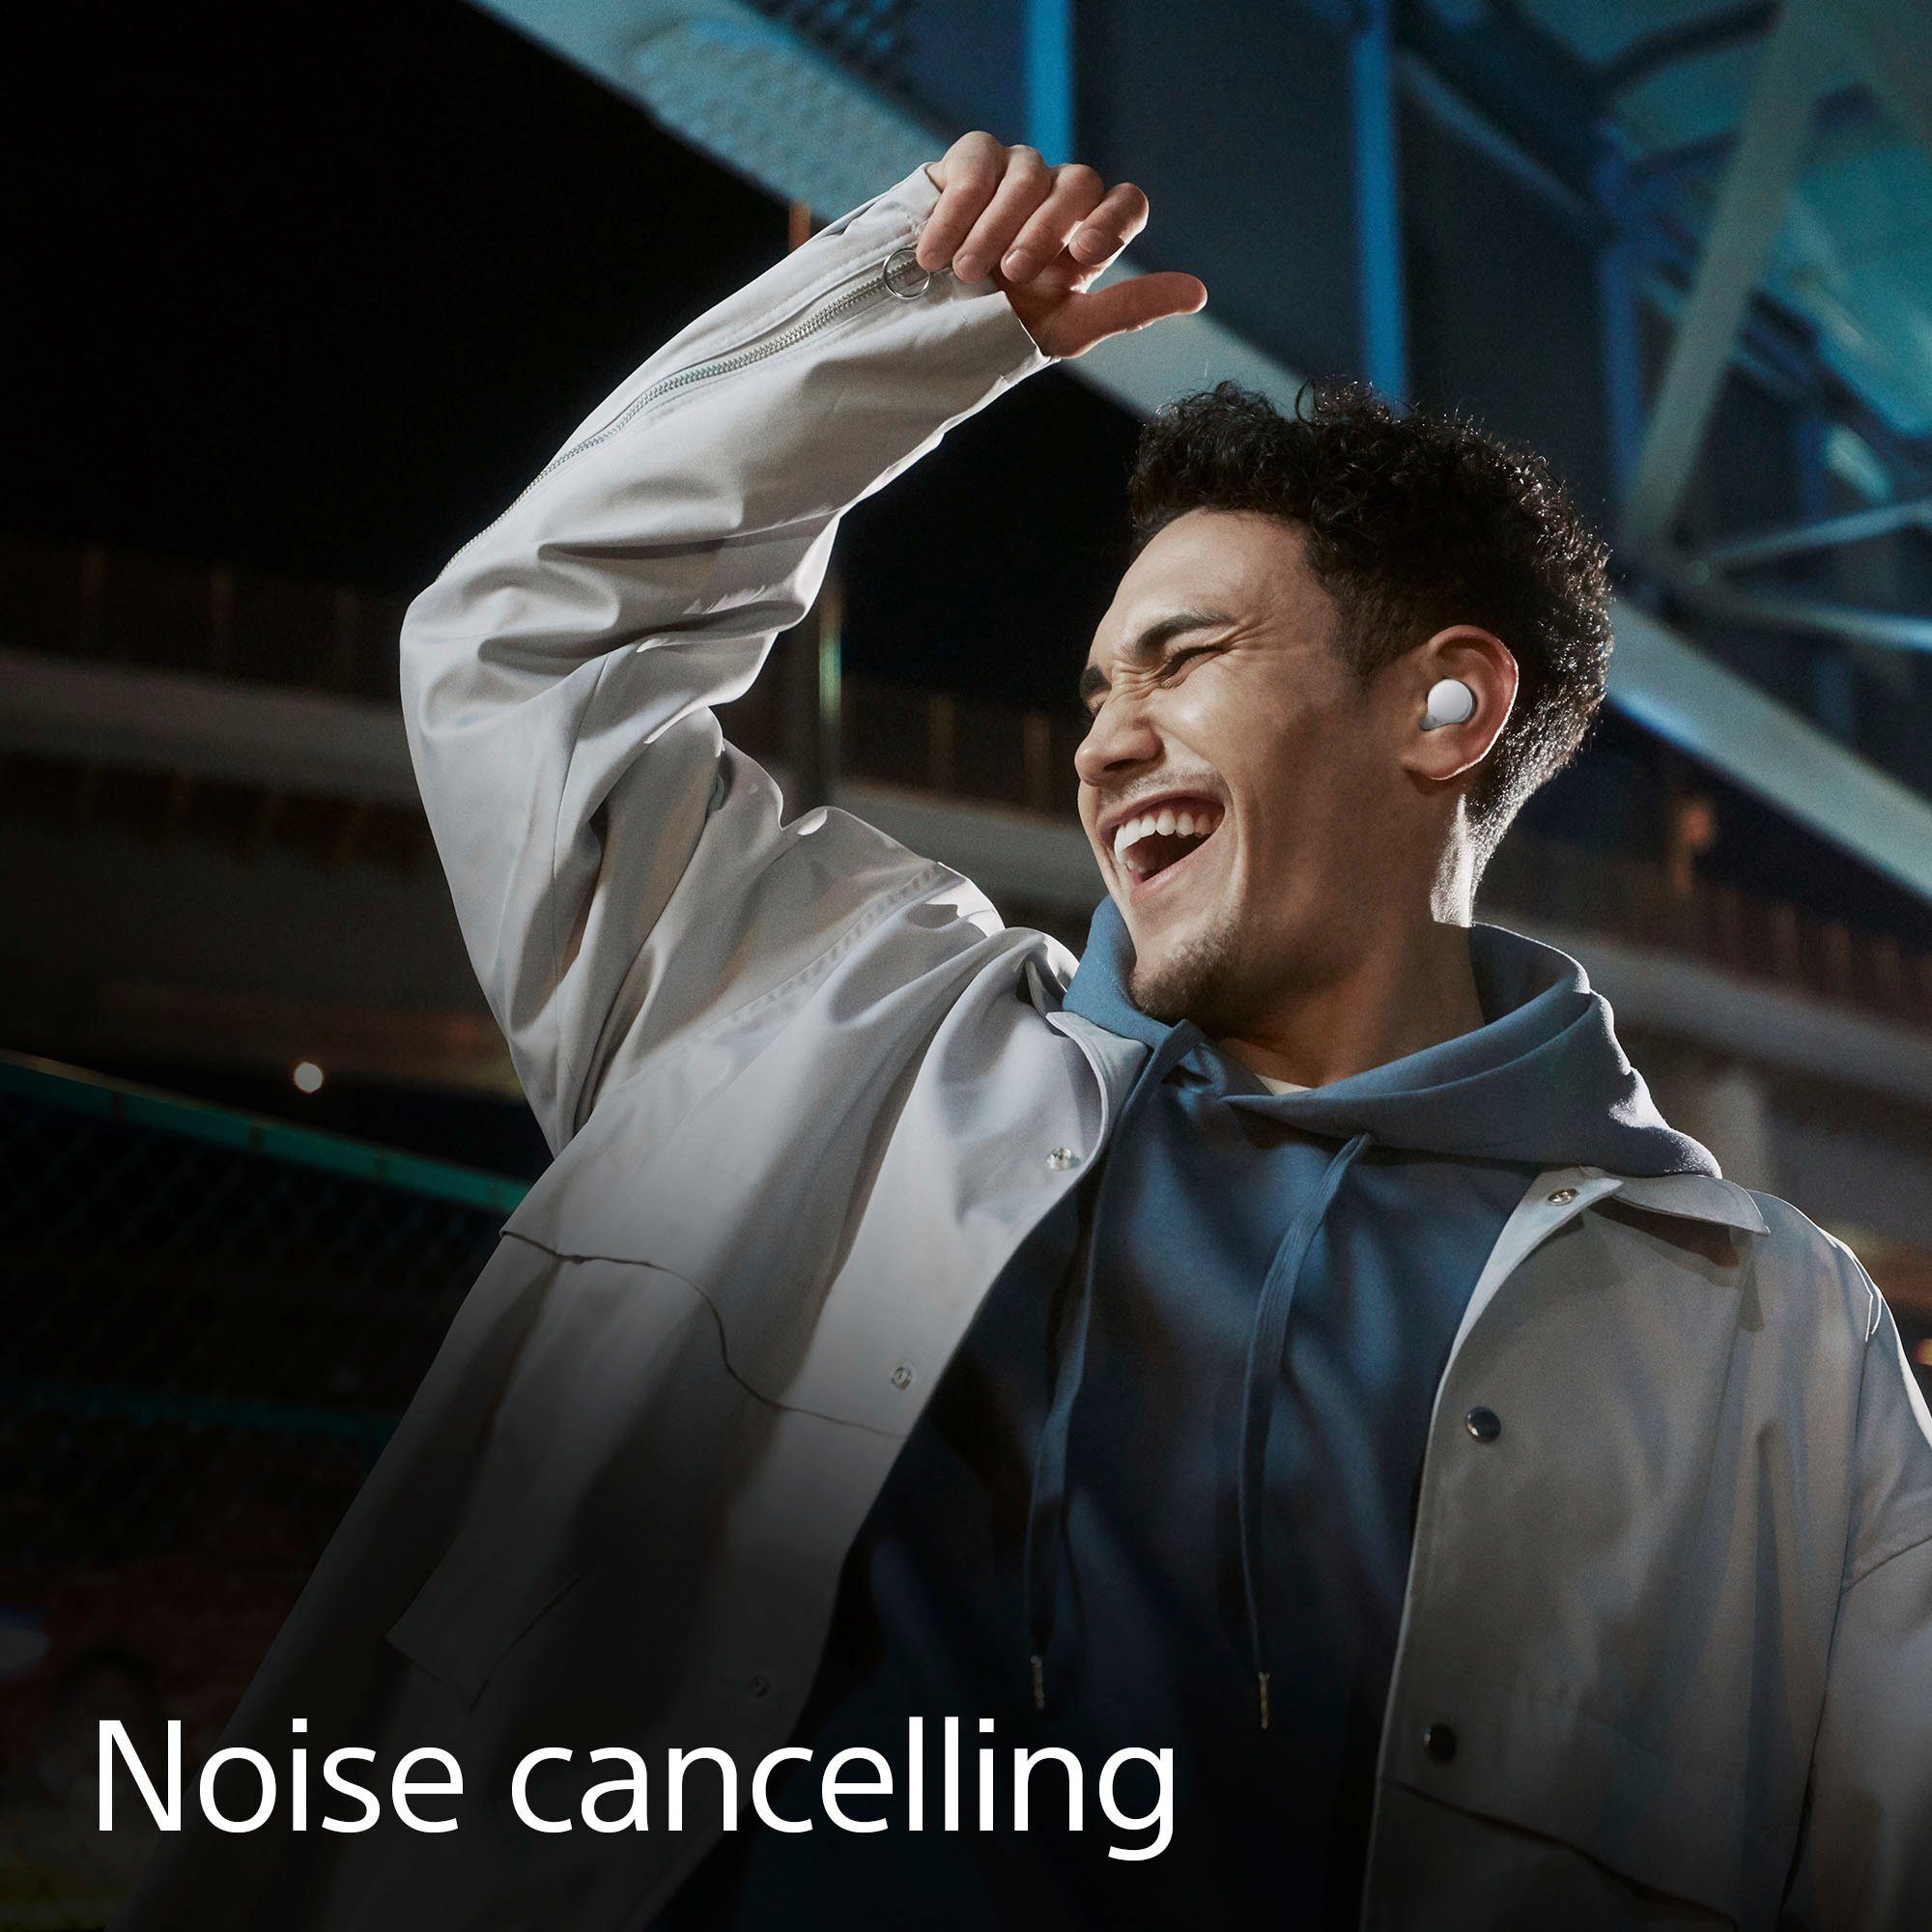 Sony LinkBuds In-Ear-Kopfhörer Wireless, S Touch-Steuerung, Akkulaufzeit) st. 20 Bluetooth, (Noise-Cancelling, Cancelling, wireless weiß NFC, Noise True